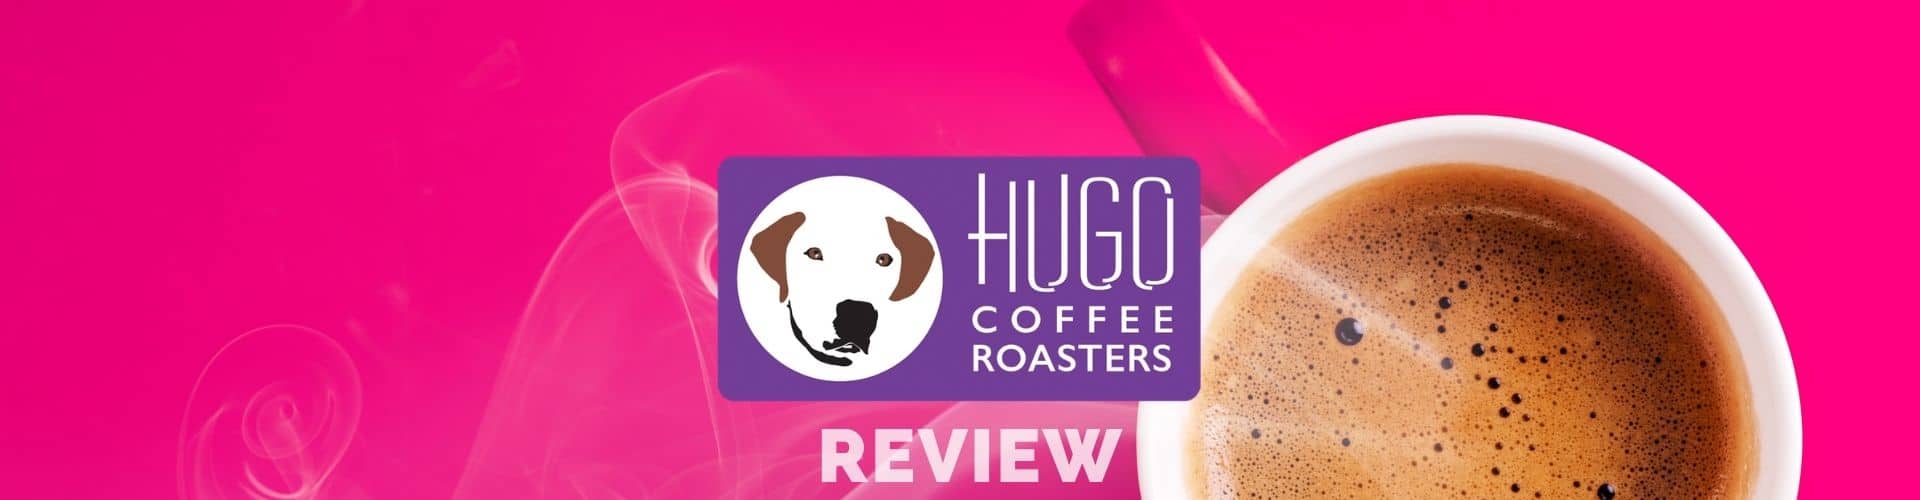 hugo cofffee review image